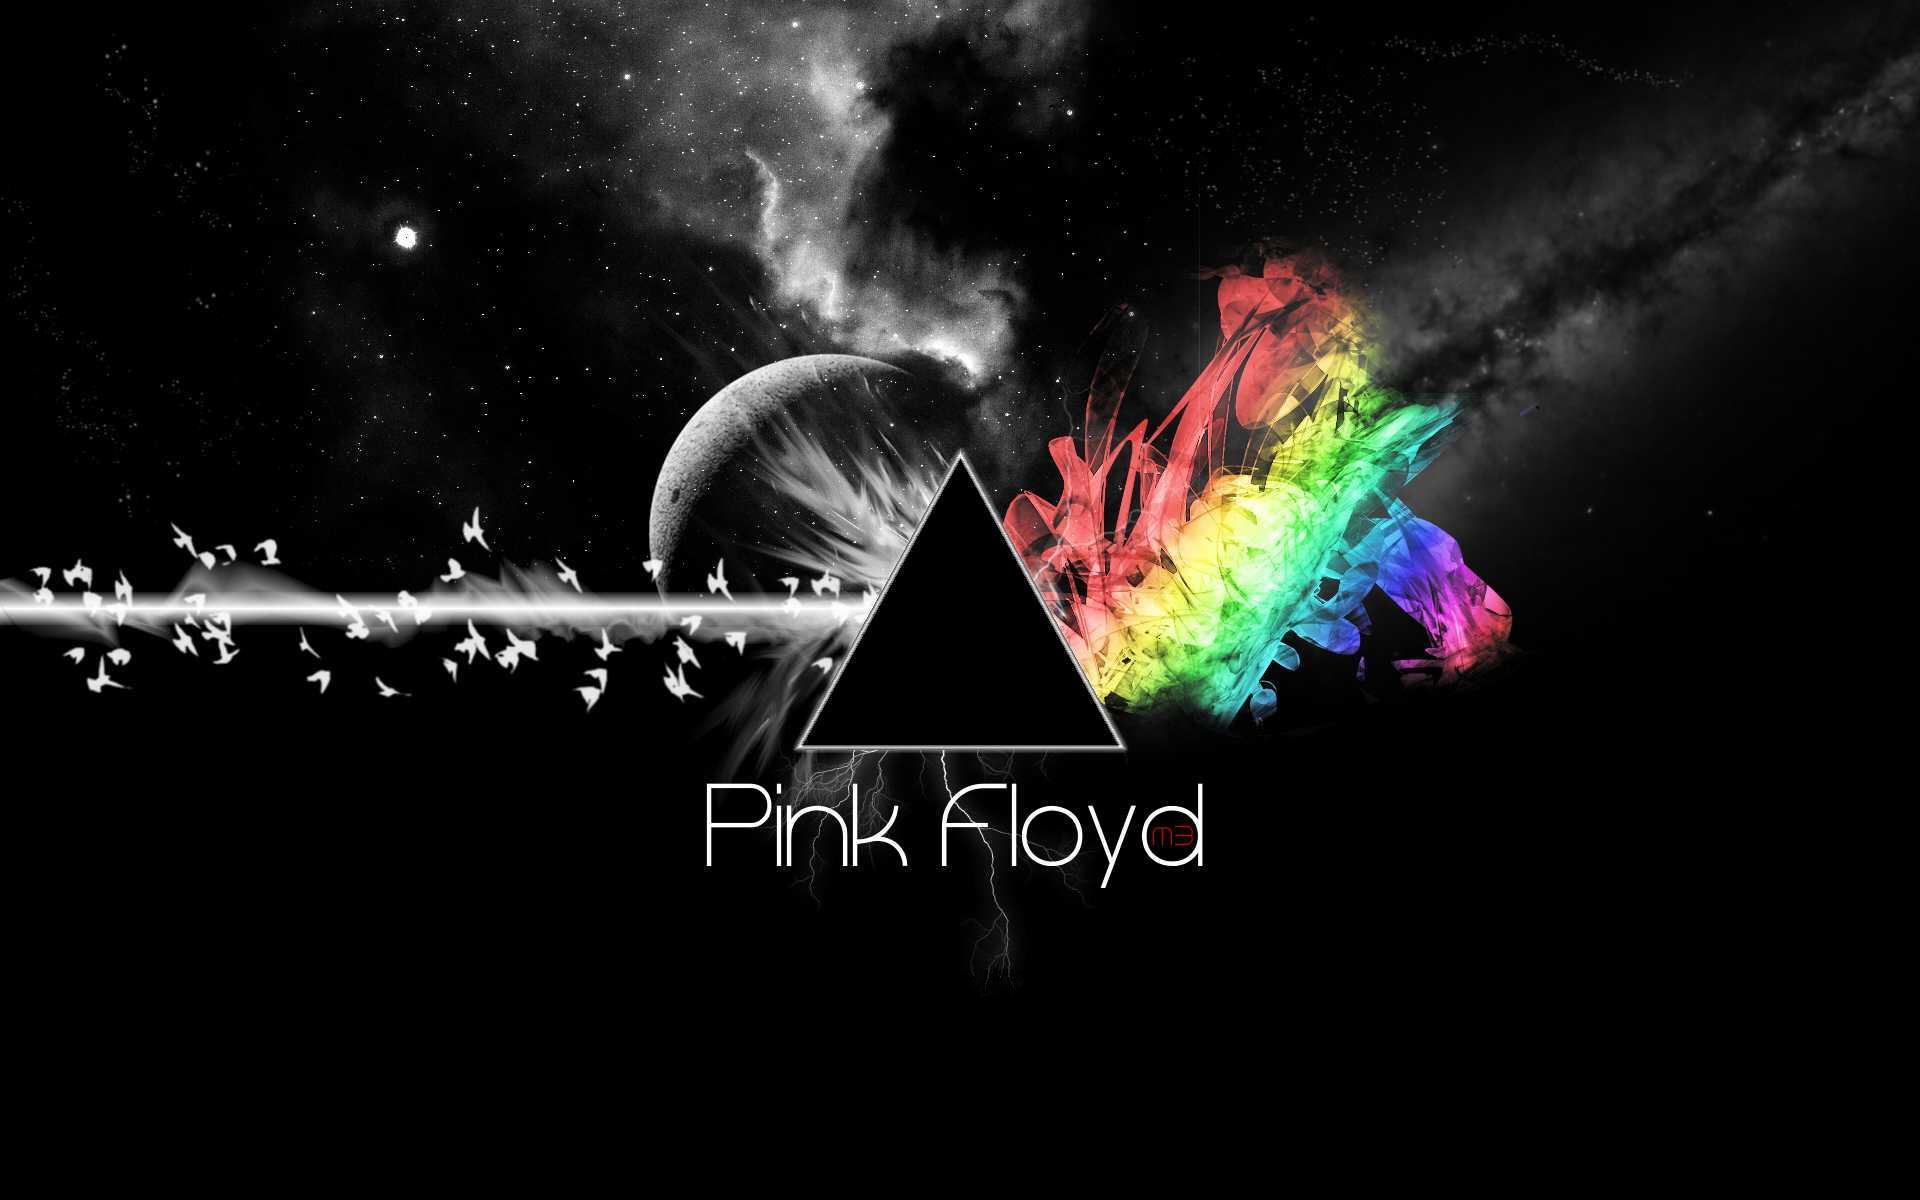 Pink Floyd hard rock classic retro bands groups album